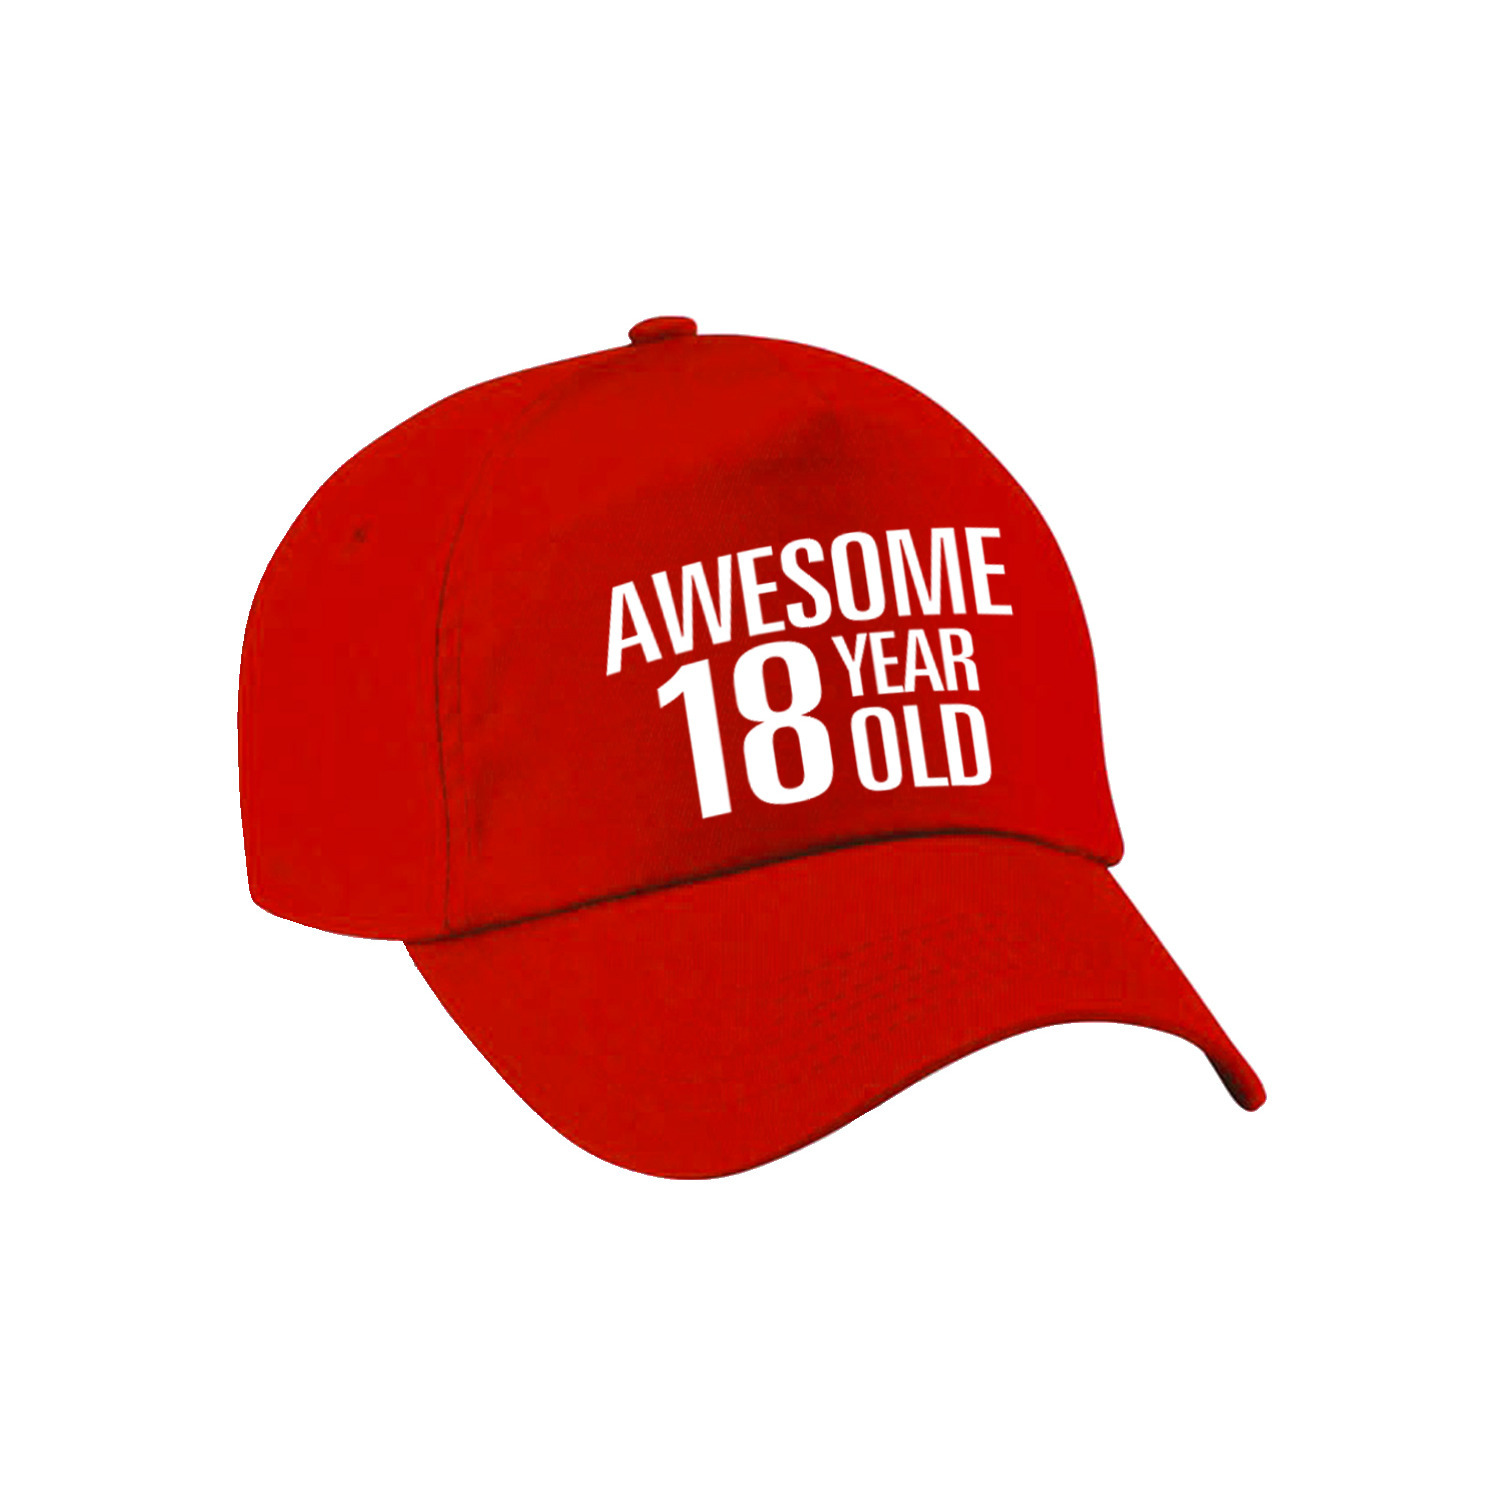 Awesome 18 year old verjaardag pet / cap rood voor dames en heren